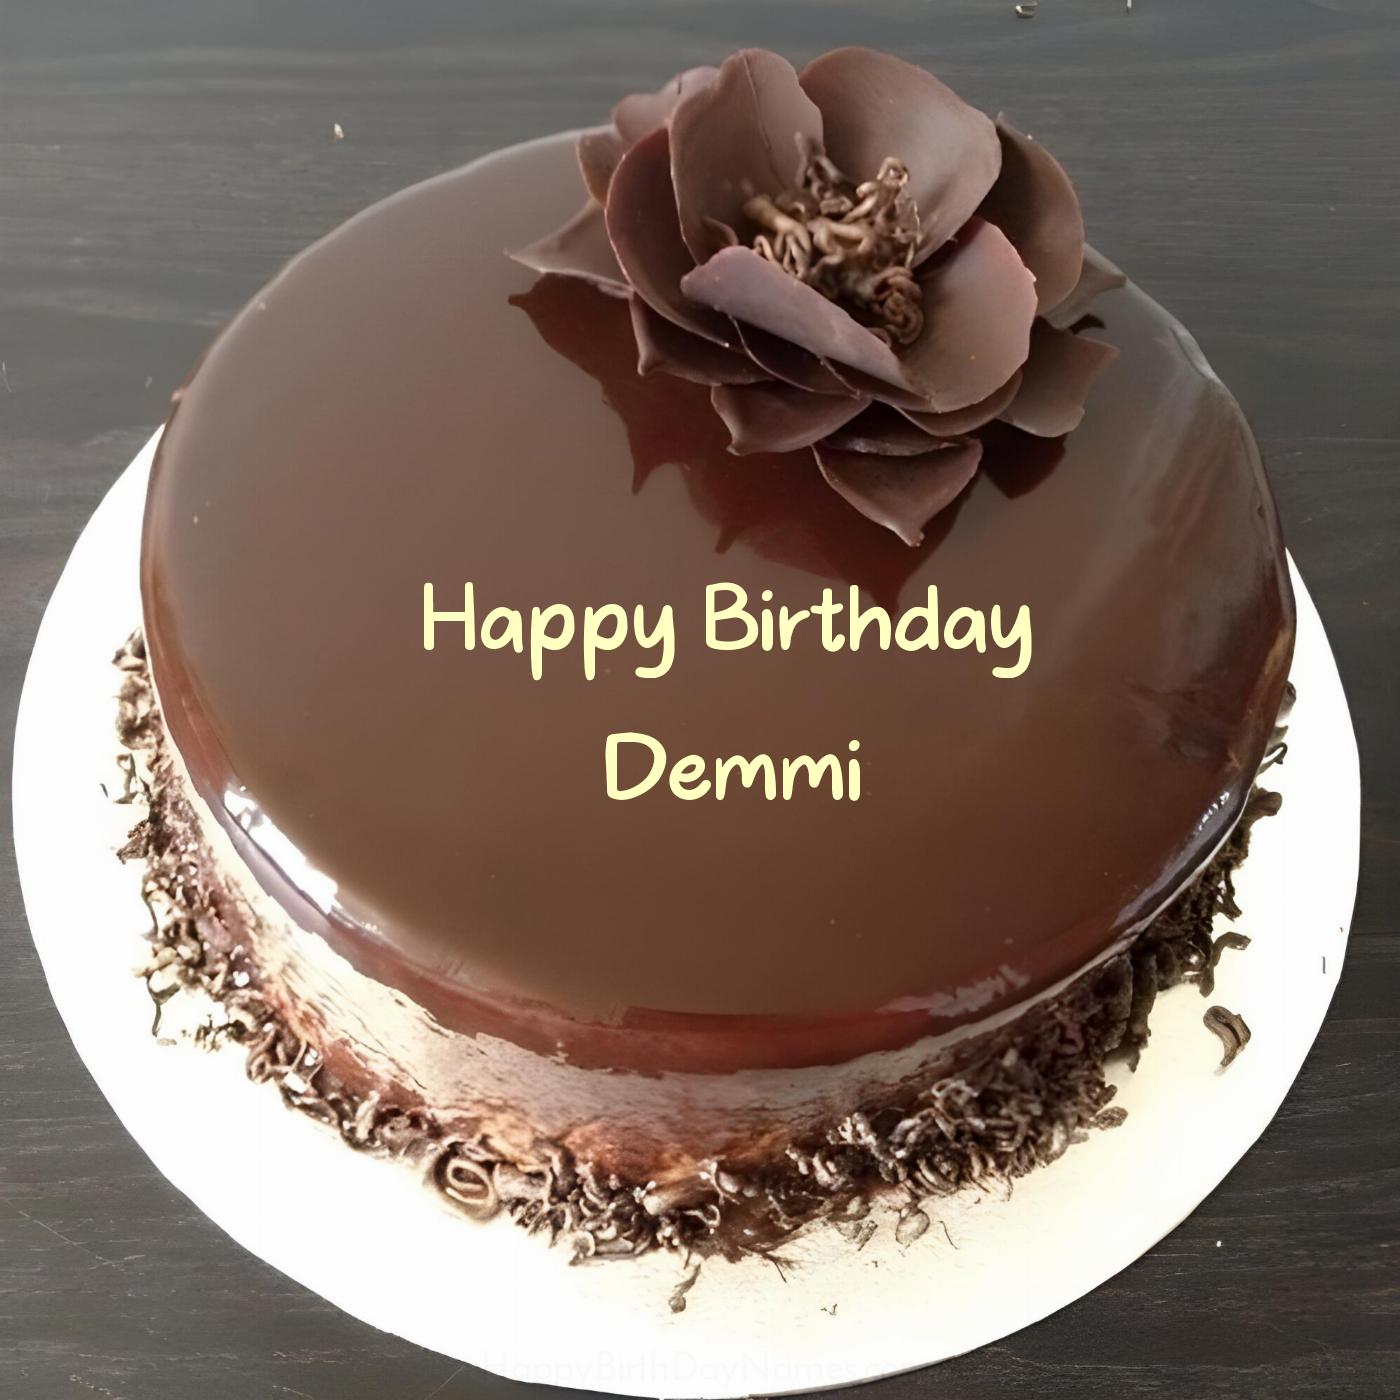 Happy Birthday Demmi Chocolate Flower Cake